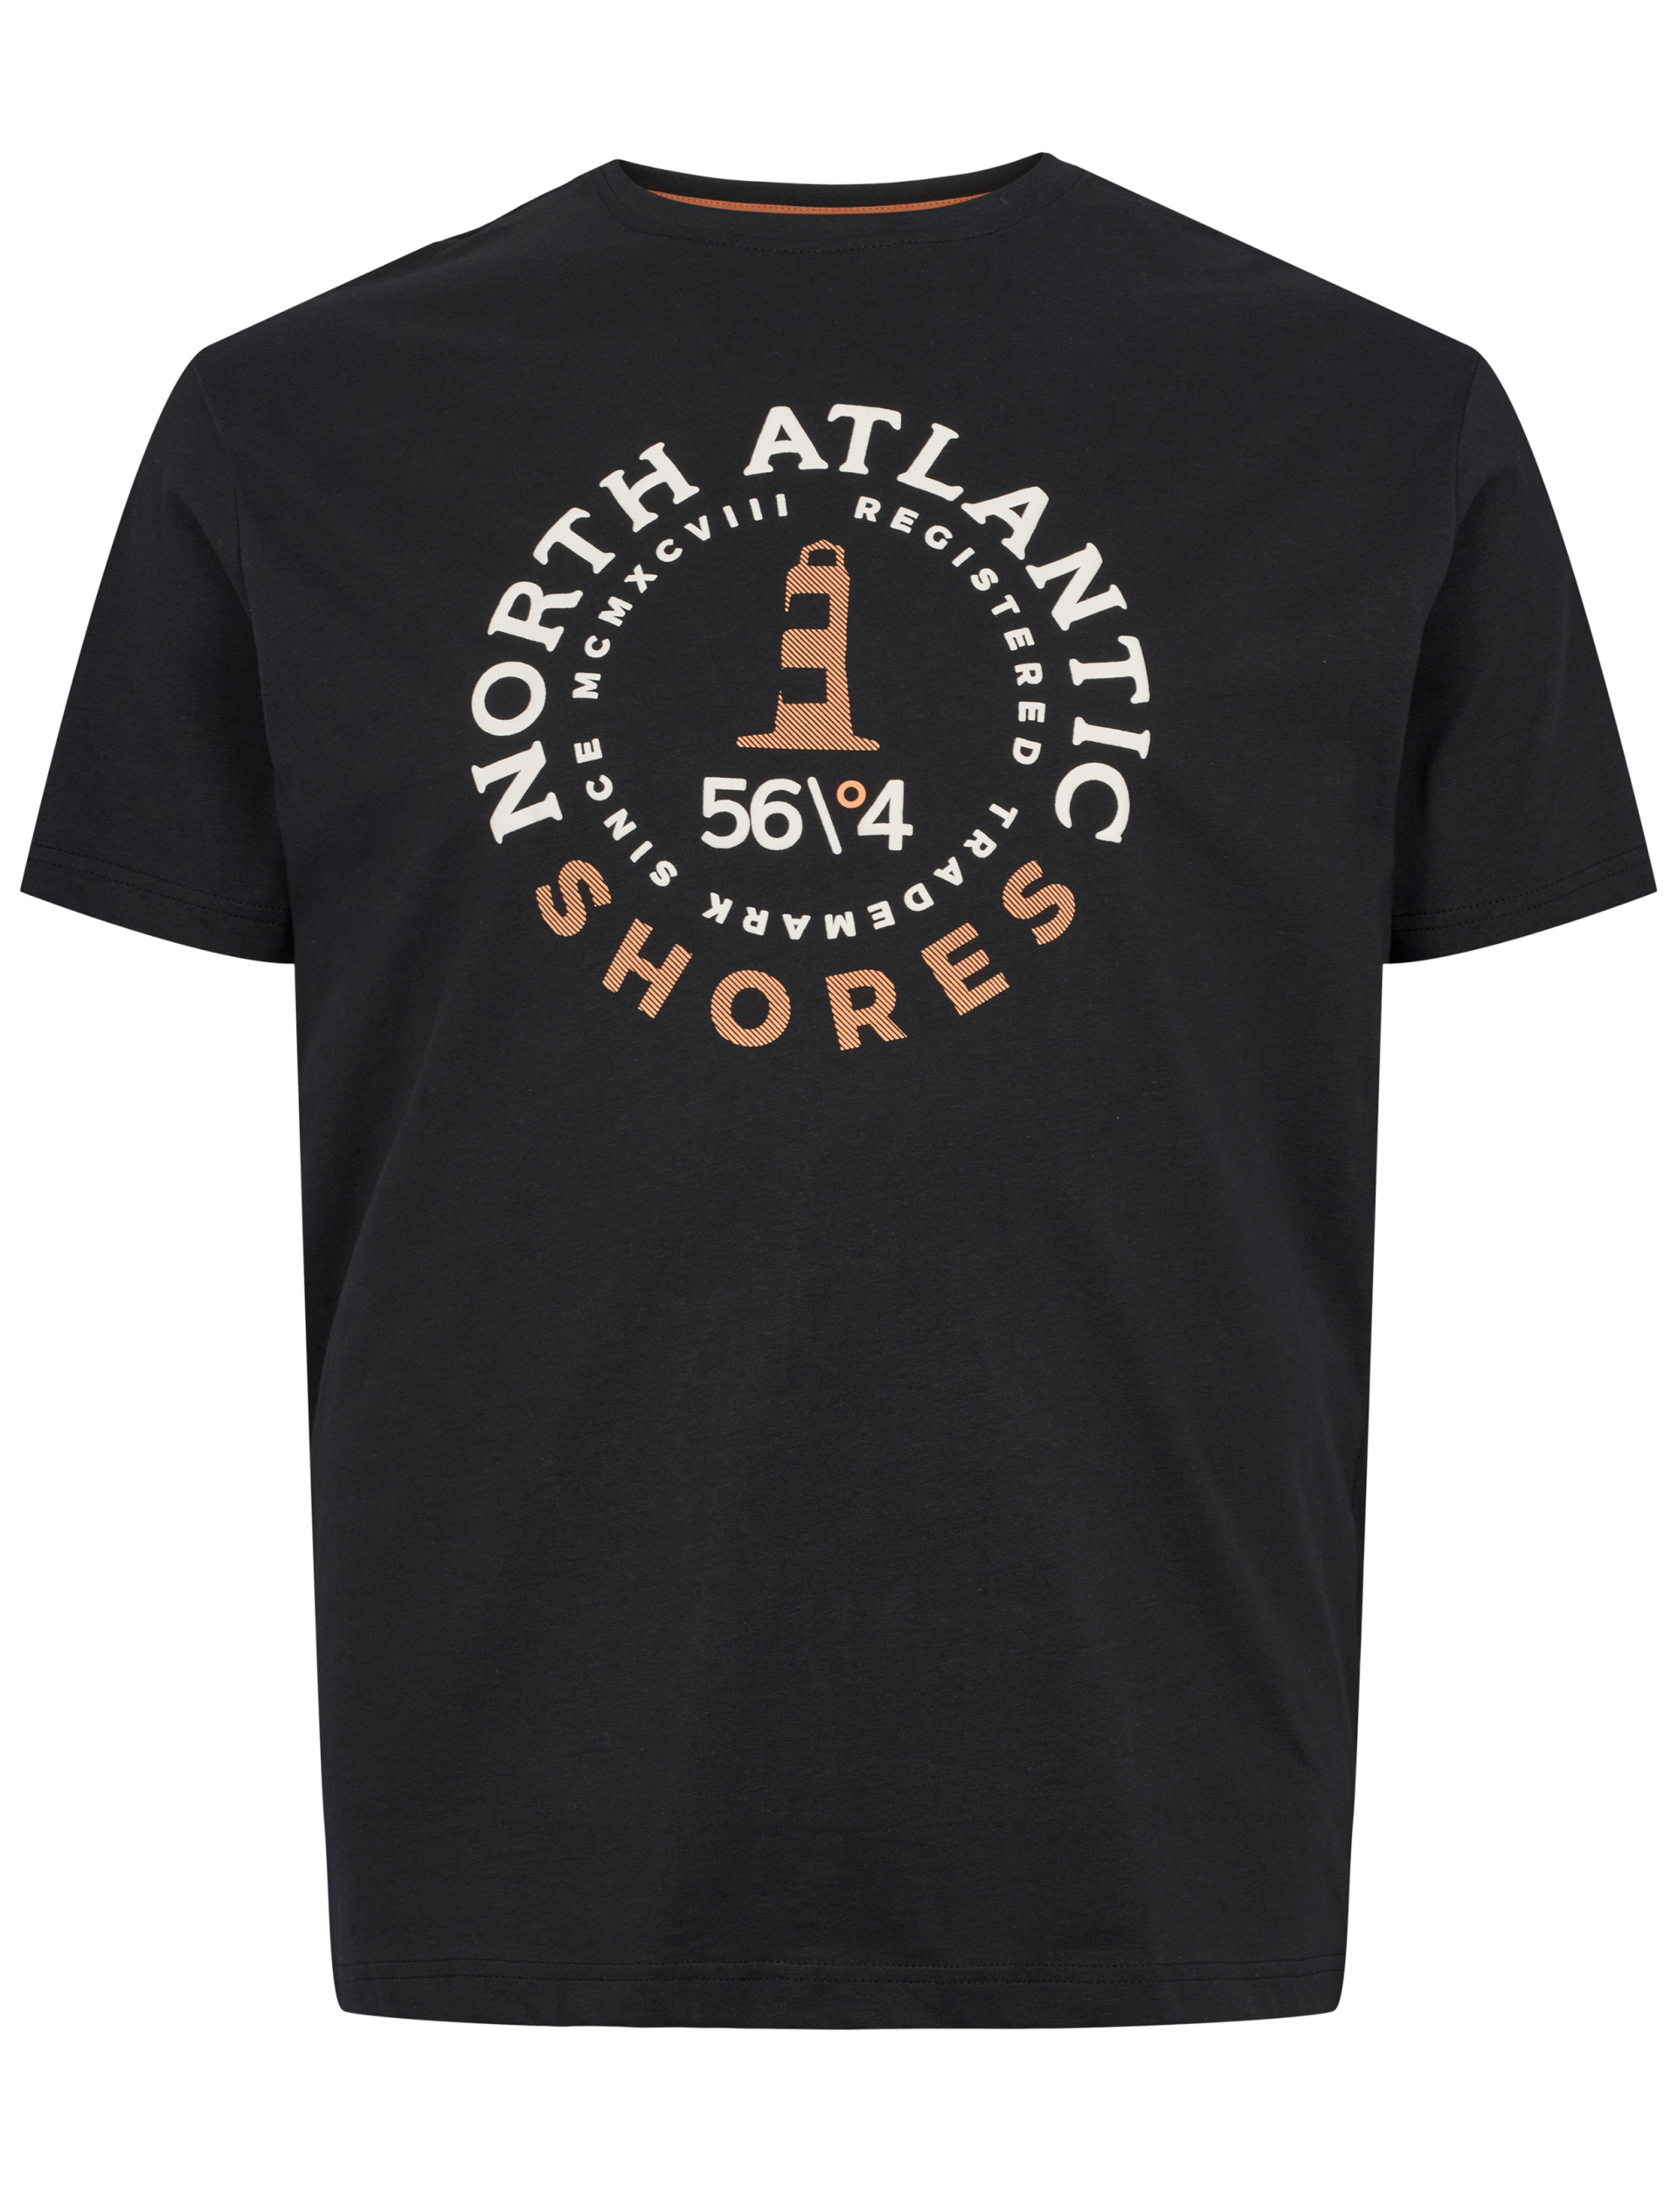 North T-shirt sort / 0099 black